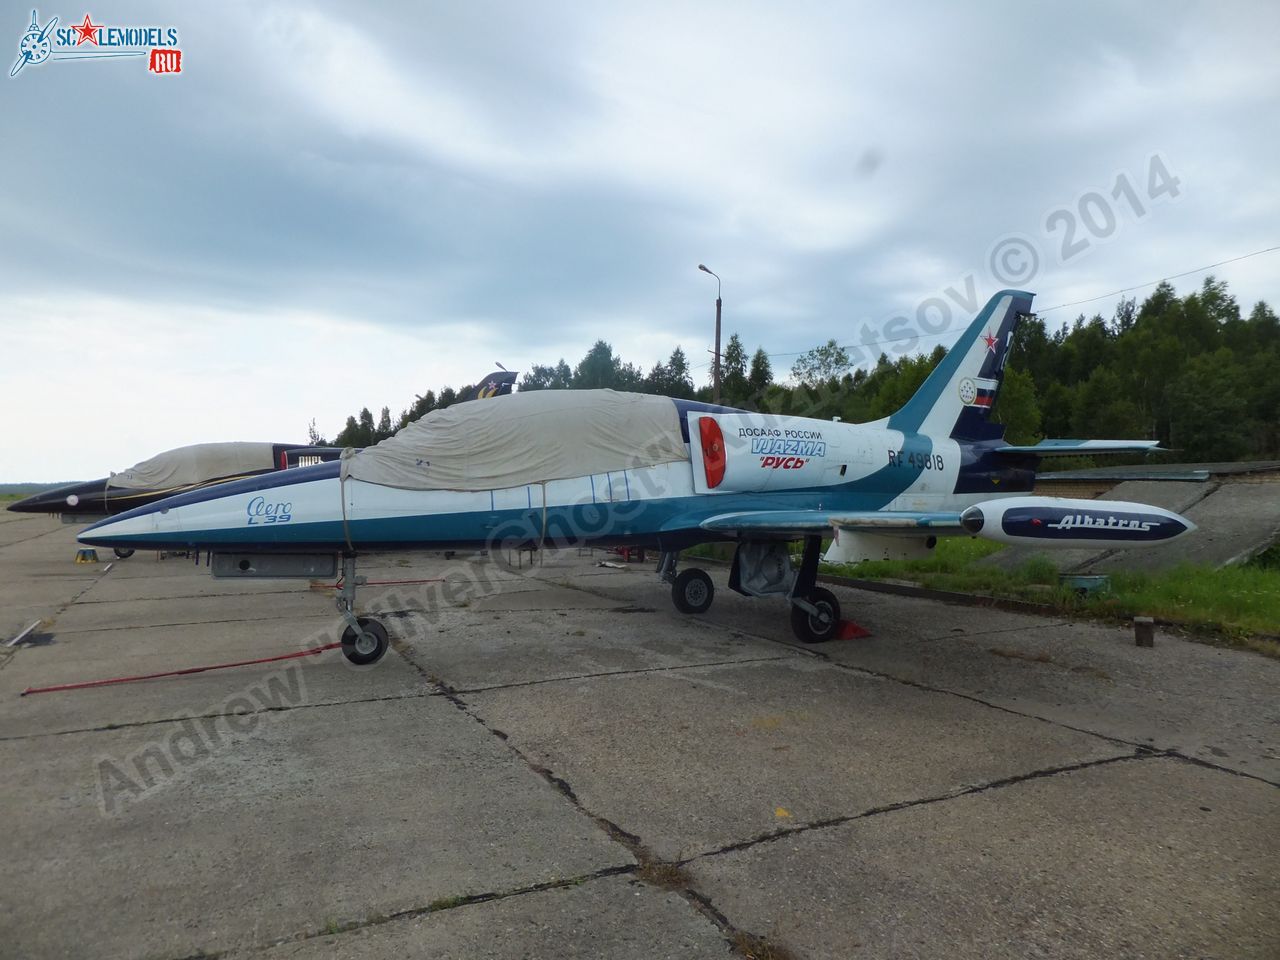 L-39_Albatros_RF-49818_0008.jpg